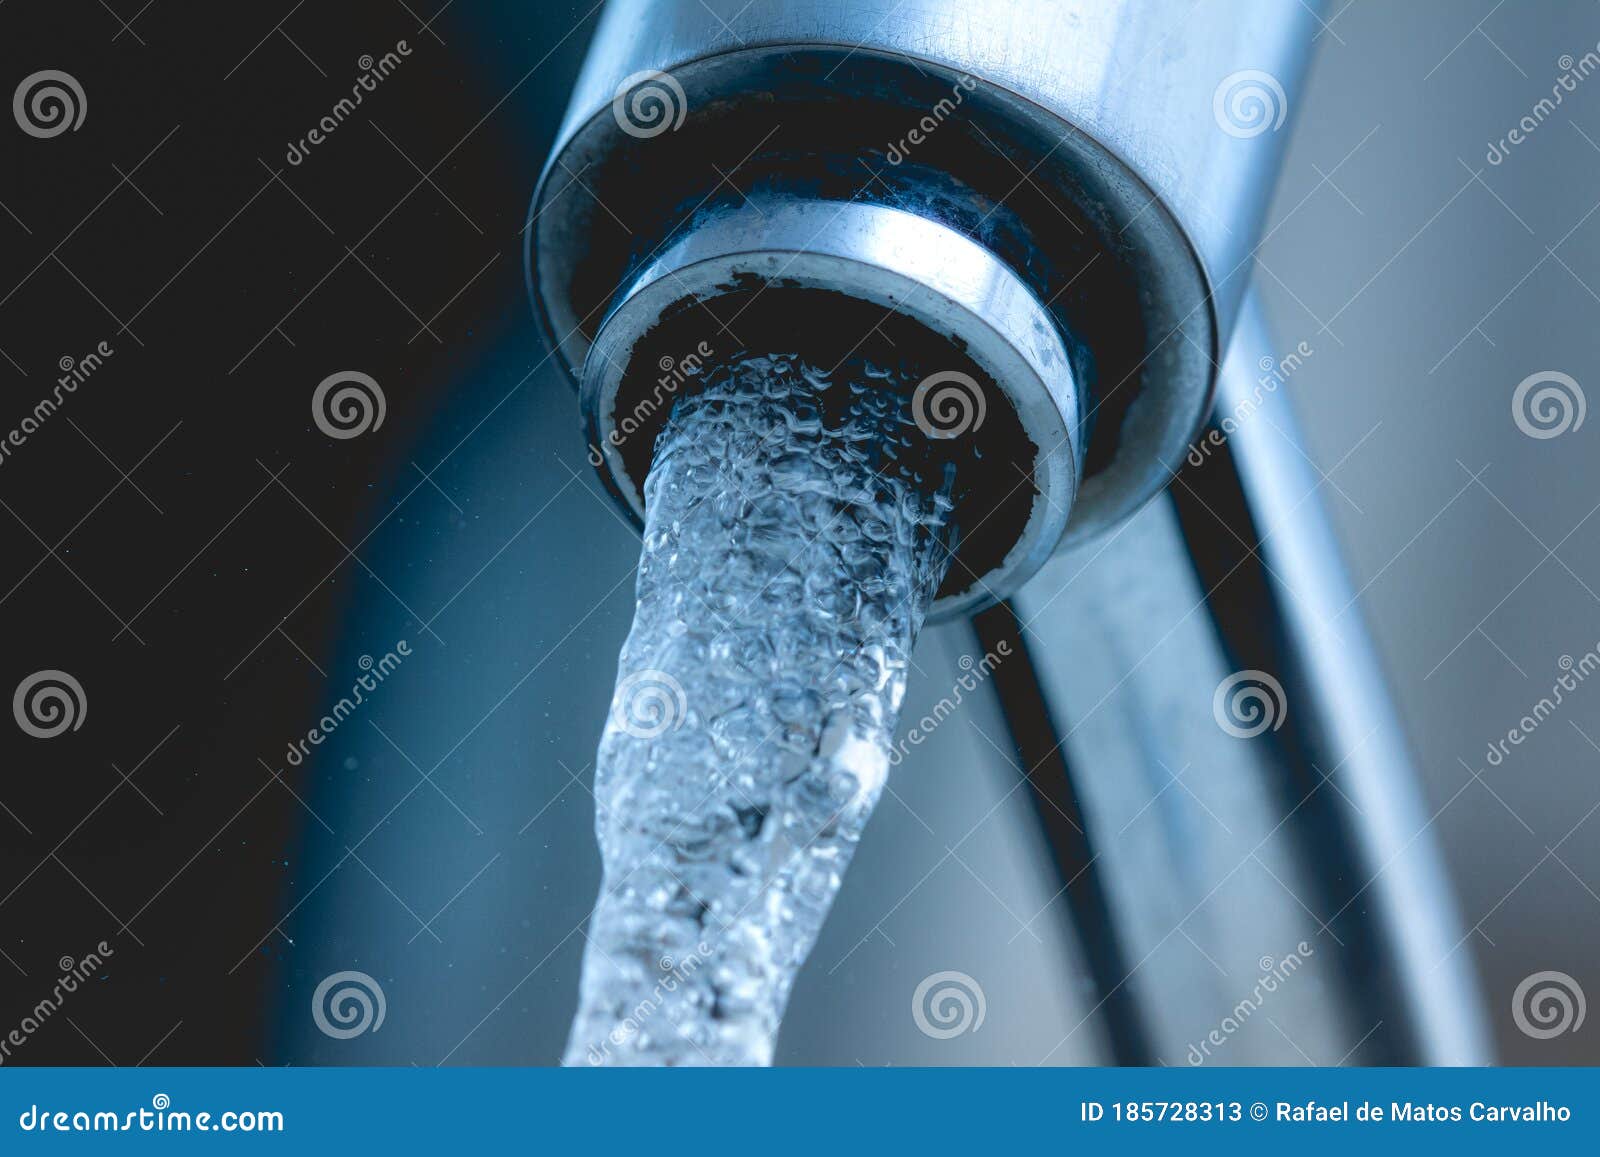 water economy concept. open tap, consumption, closeup.